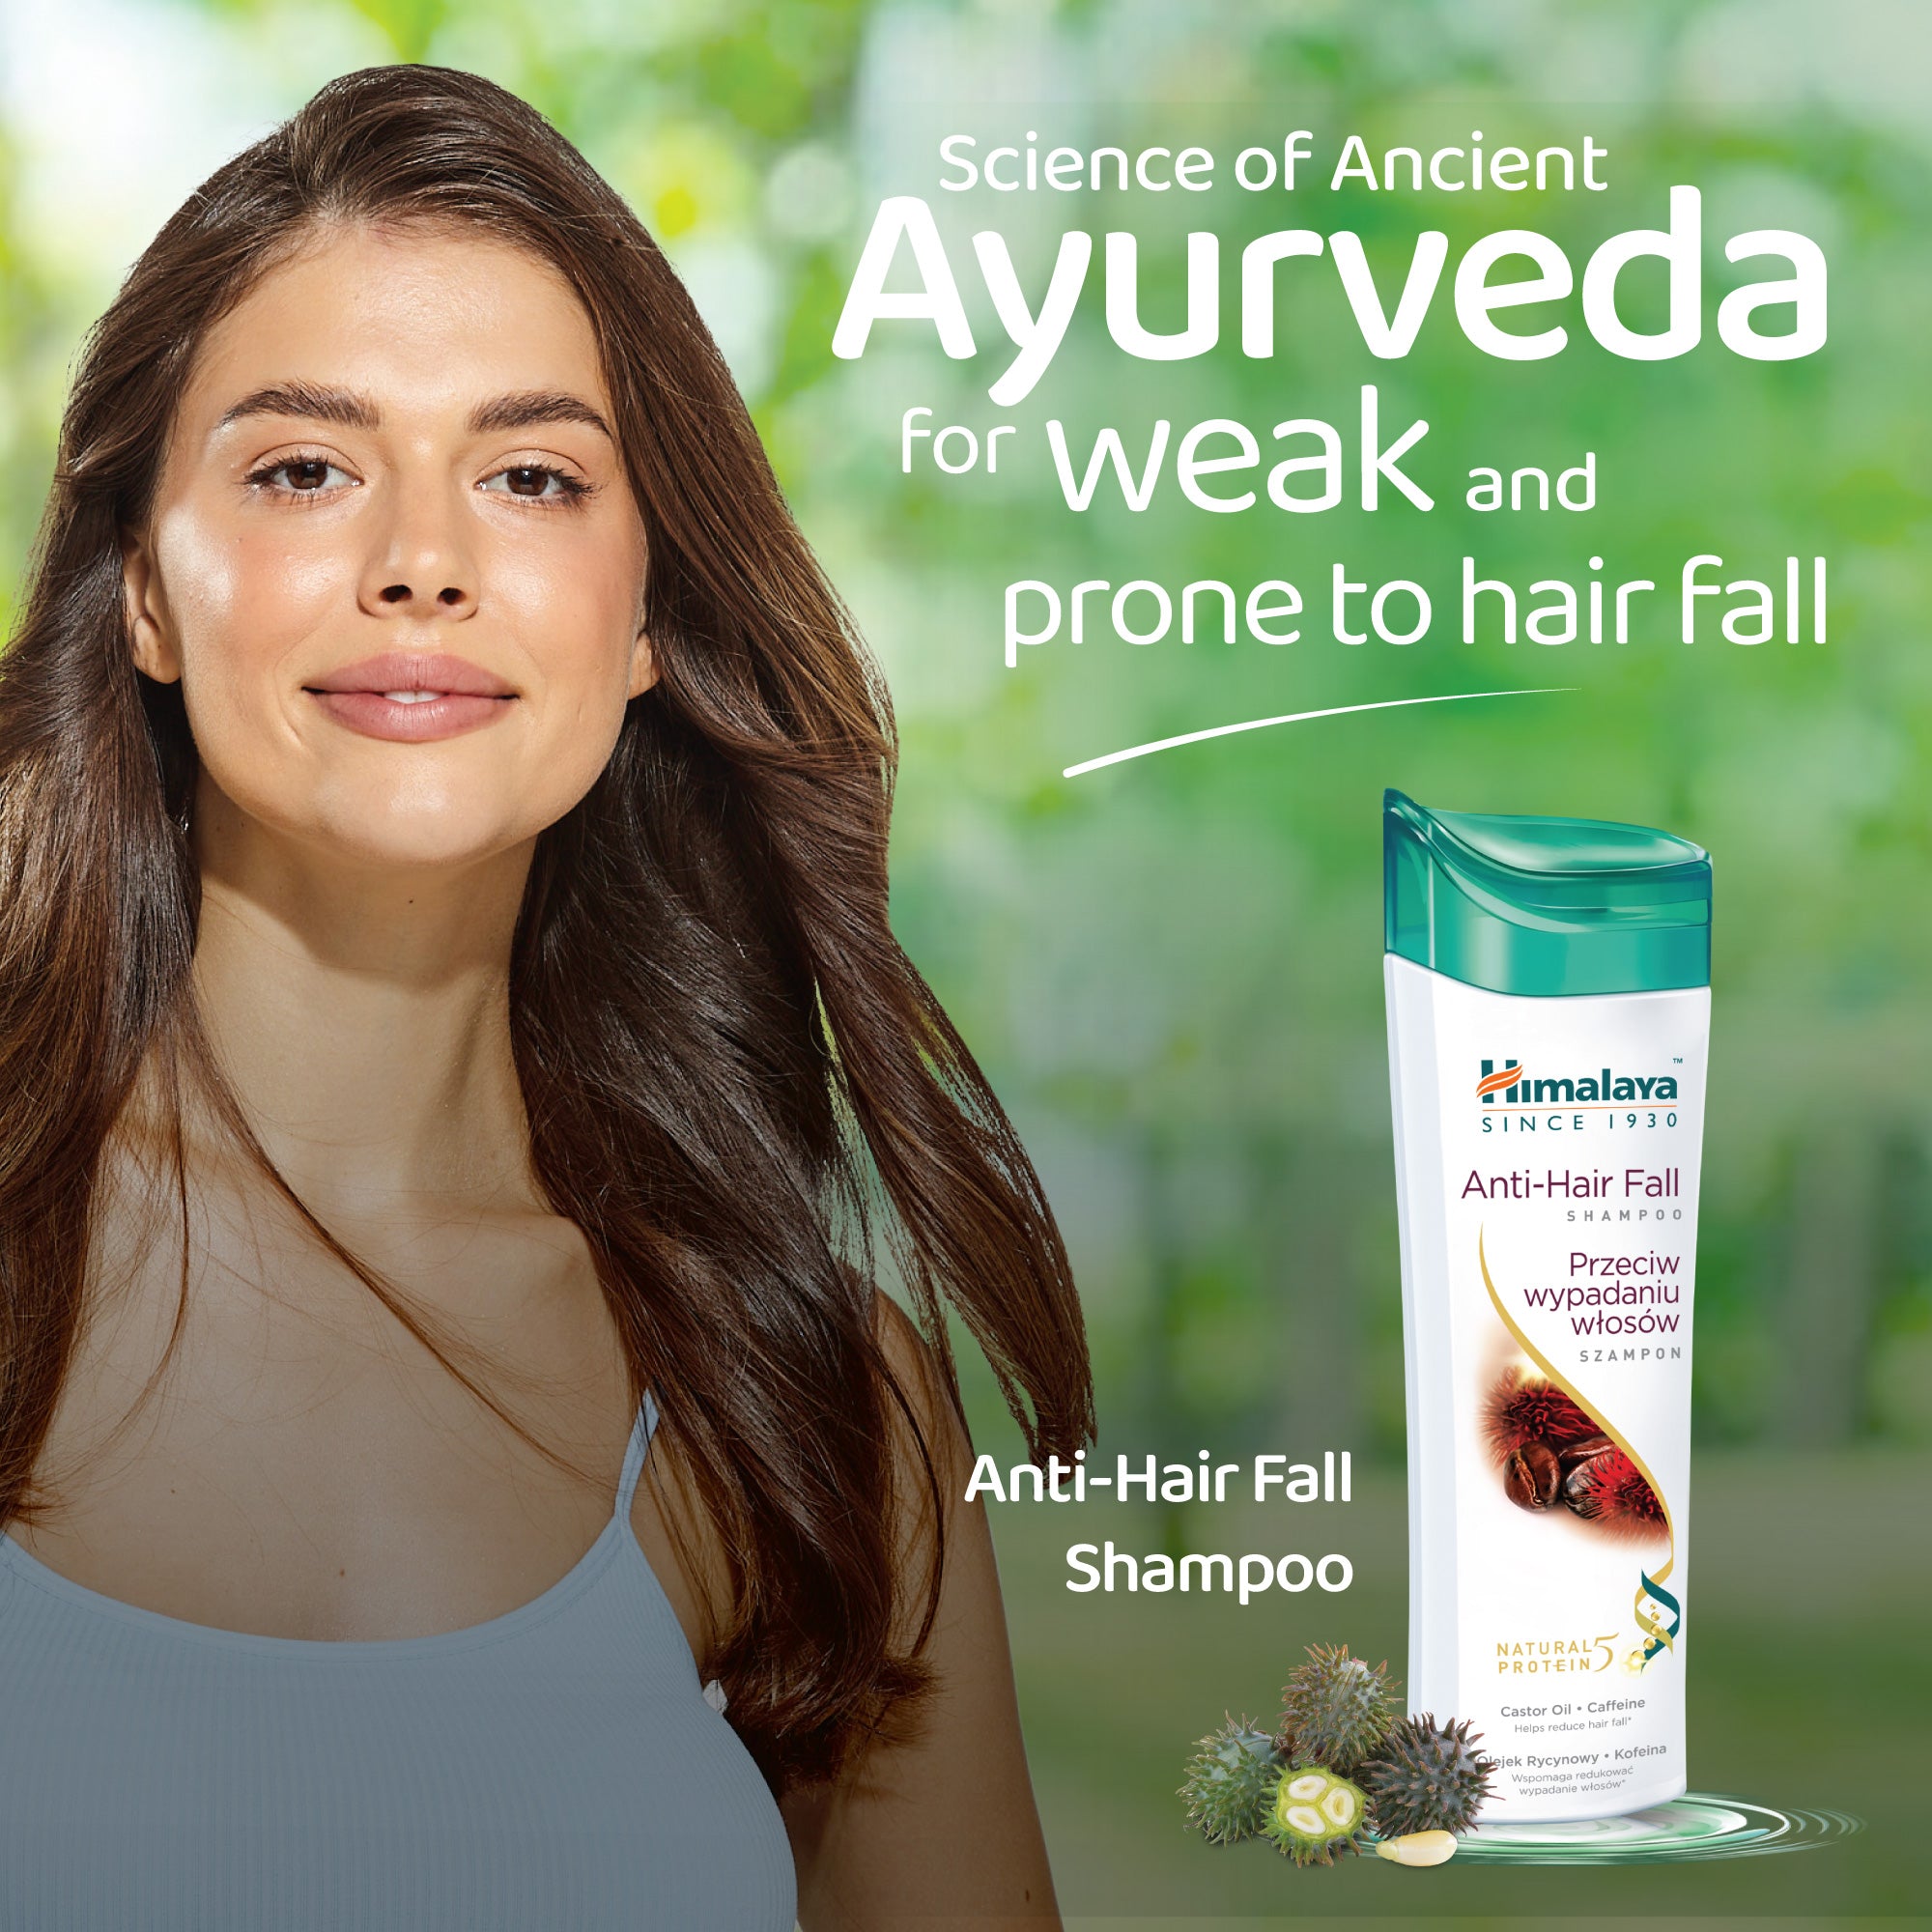 Himalaya Anti-Hair Fall Shampoo - 400 ml